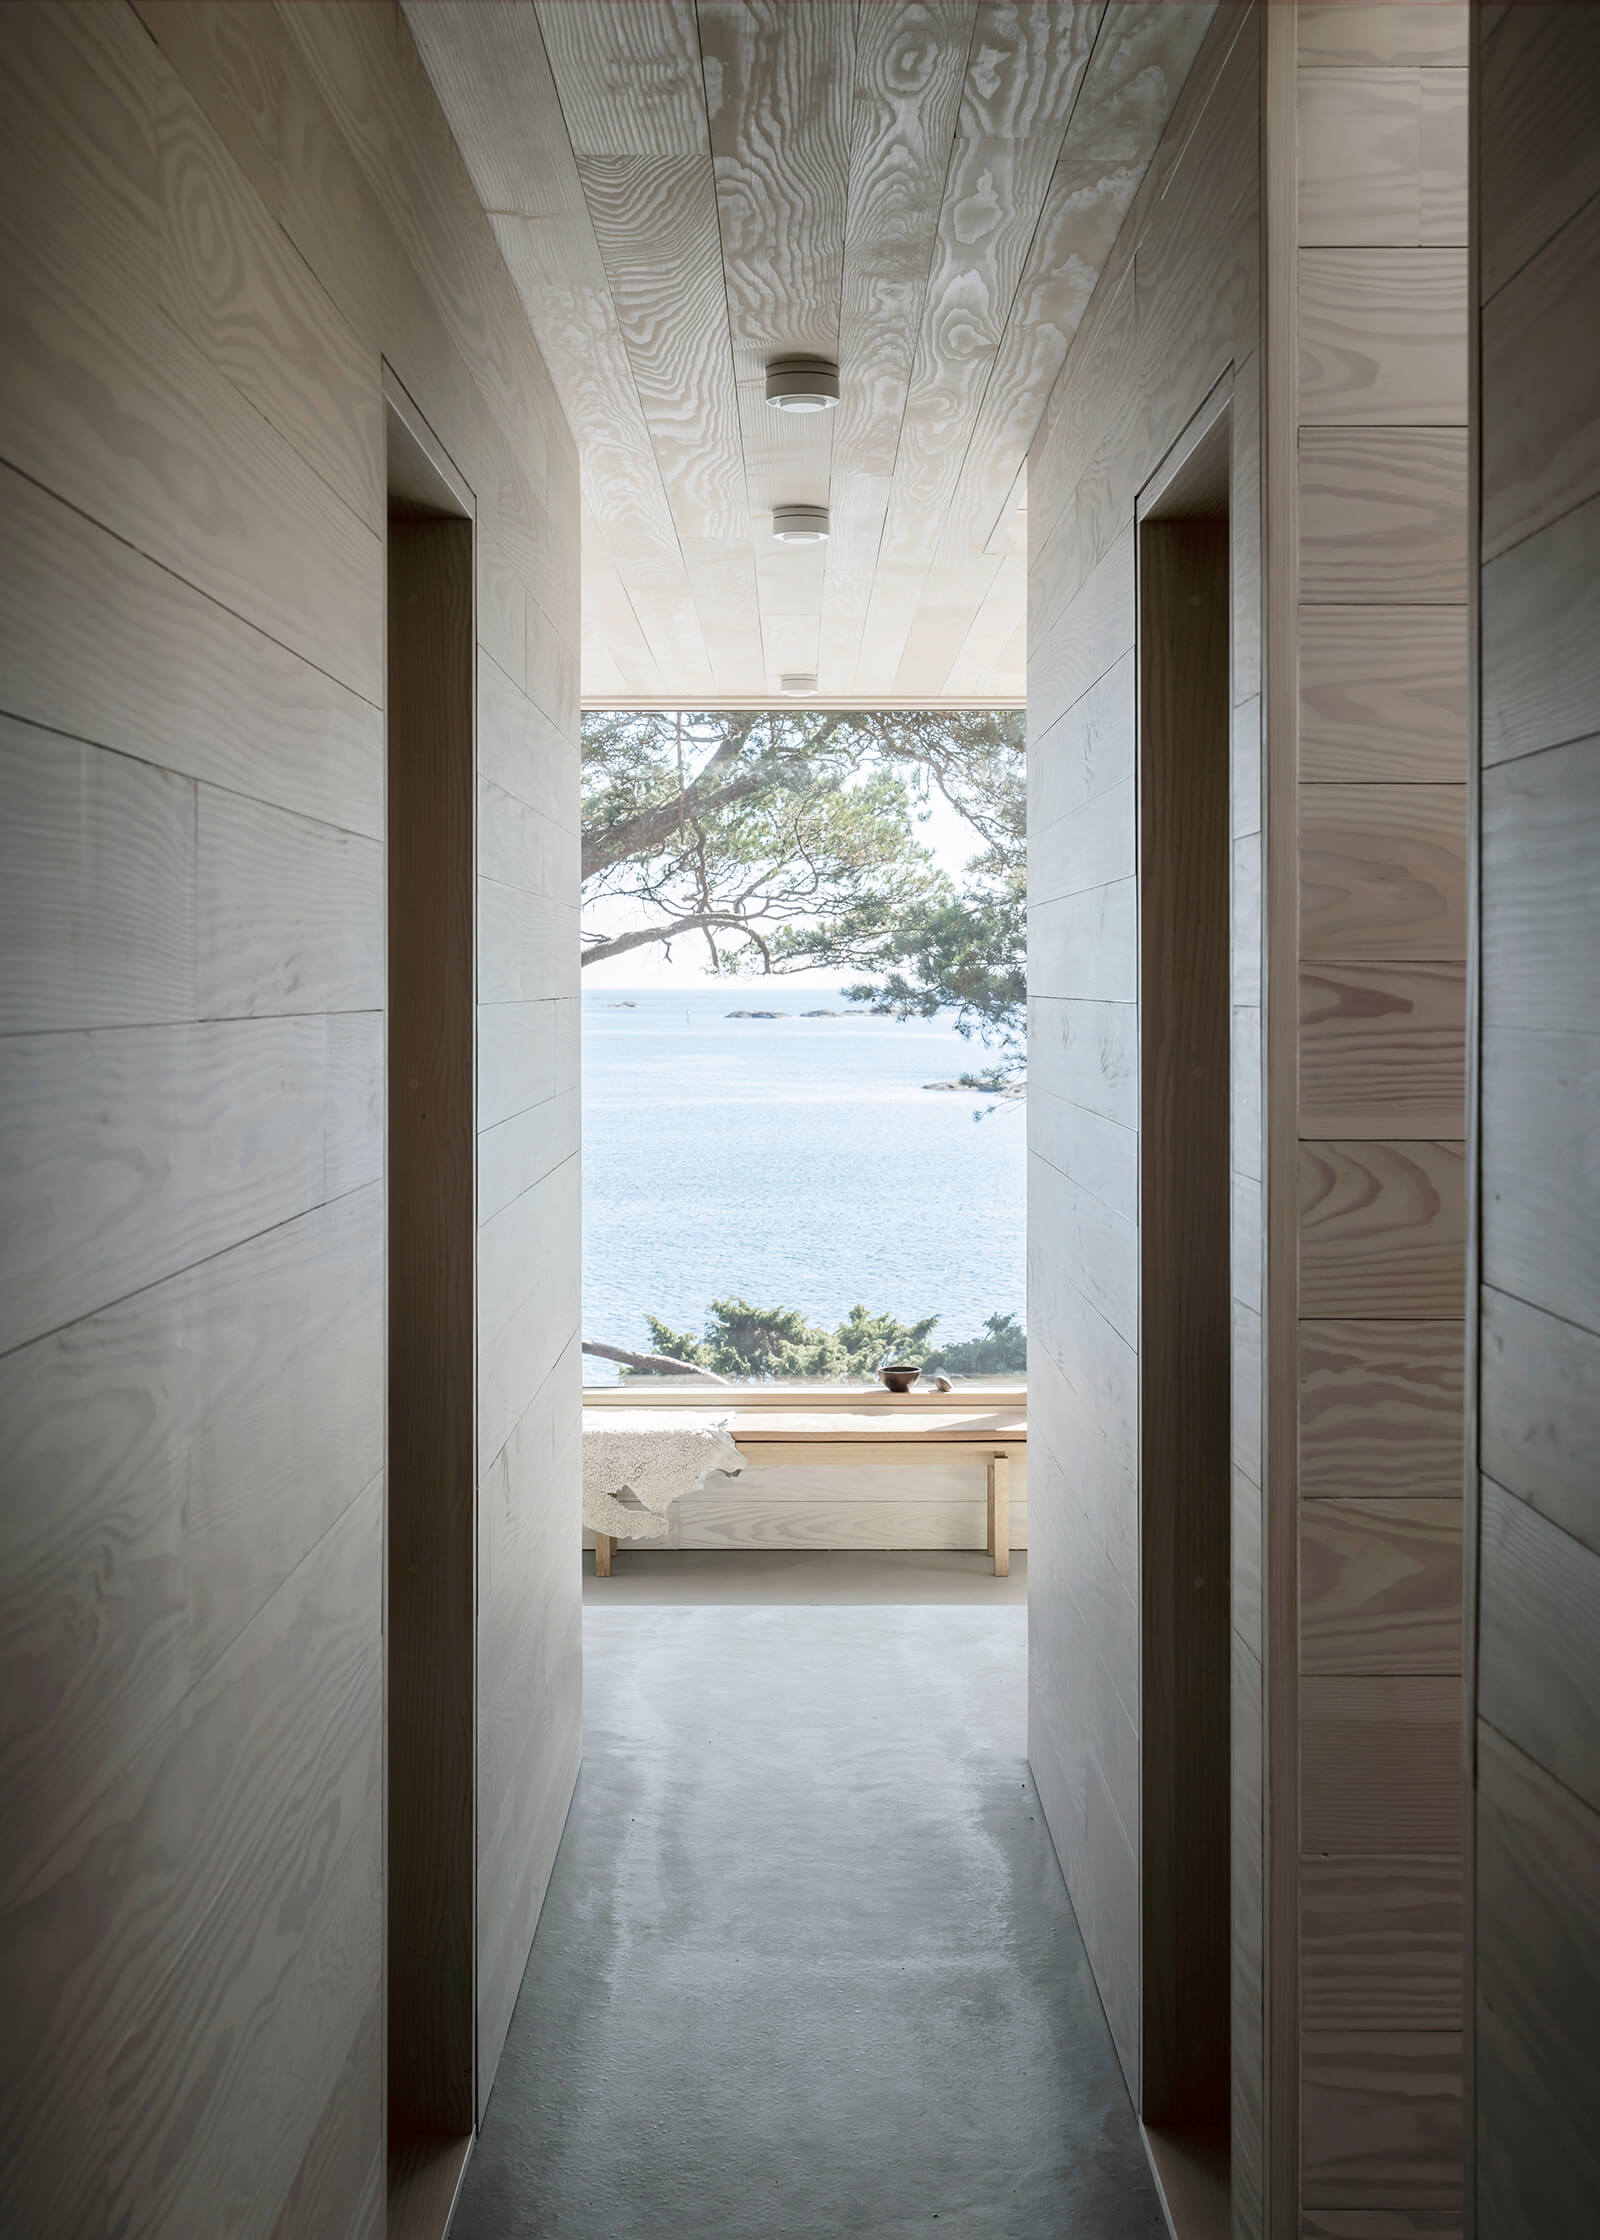 L'intérieur crée des volumes variés d'espaces | Saltviga House | Kolman Boye Architects | STIRworld